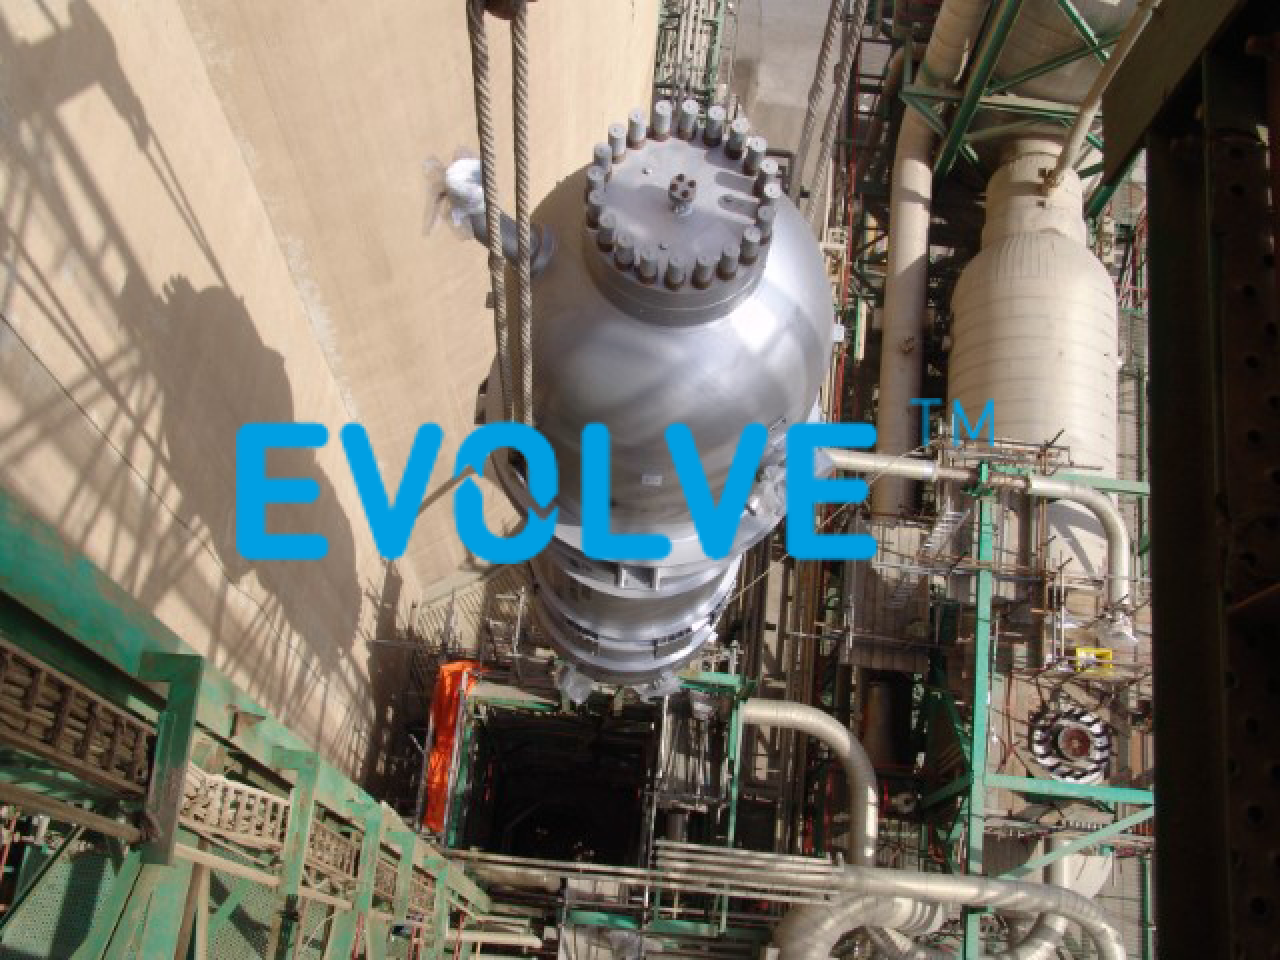 Evolve card image including logo